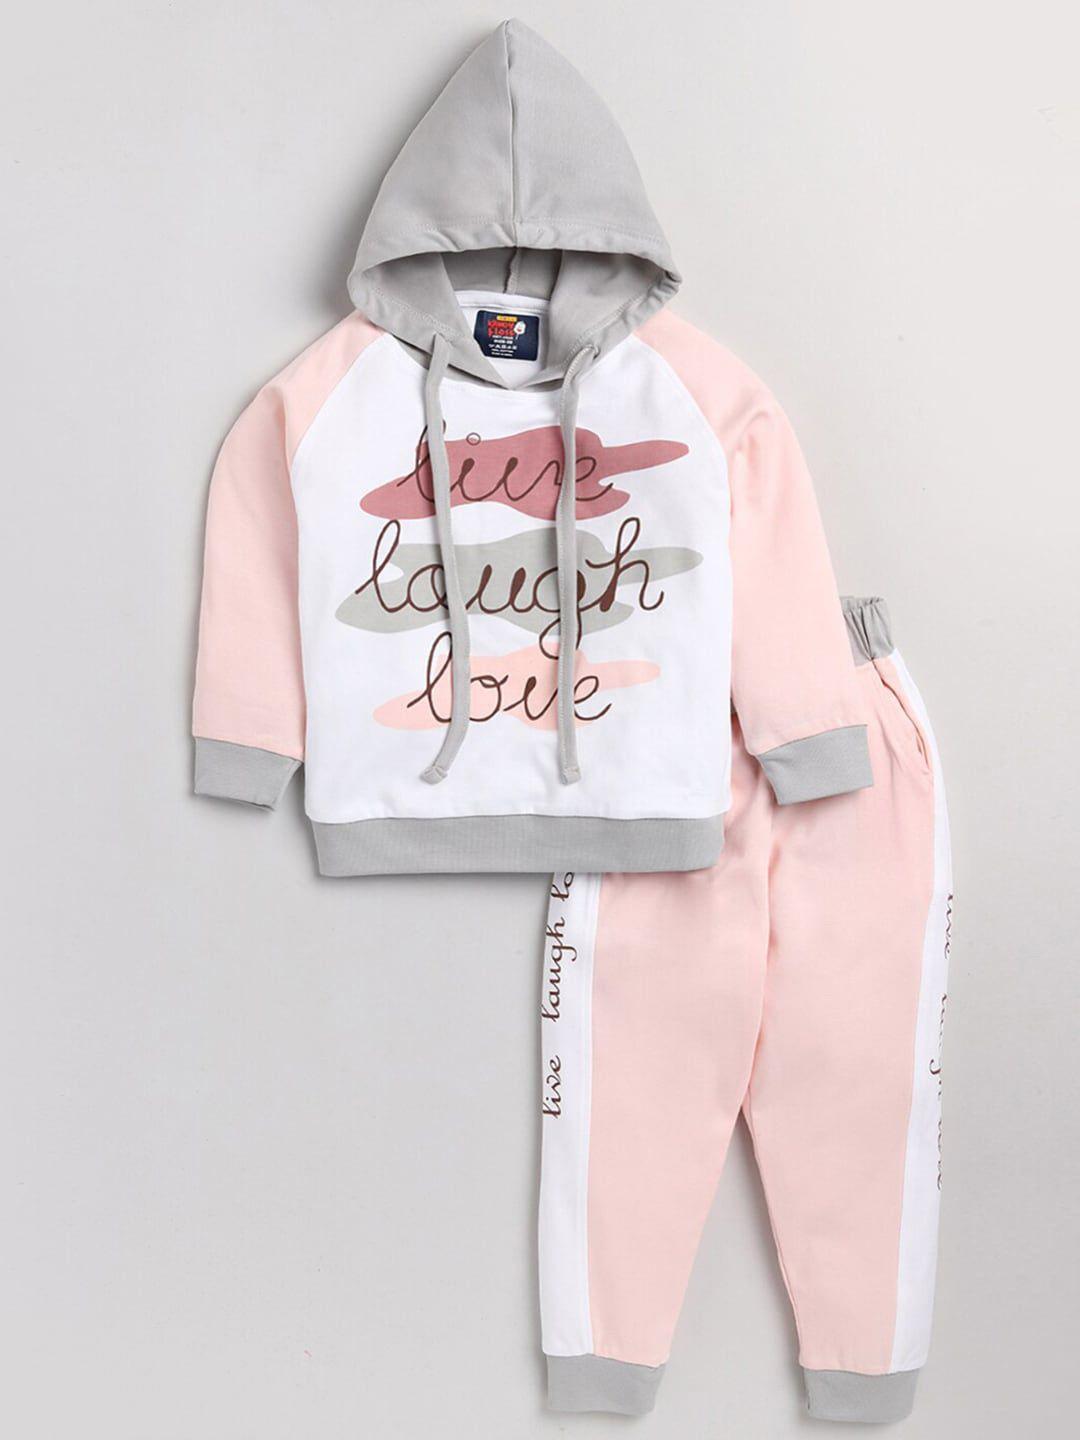 amul-kandyfloss-unisex-kids-pink-&-white-colourblocked-pure-cotton-top-with-hood-&-pyjama